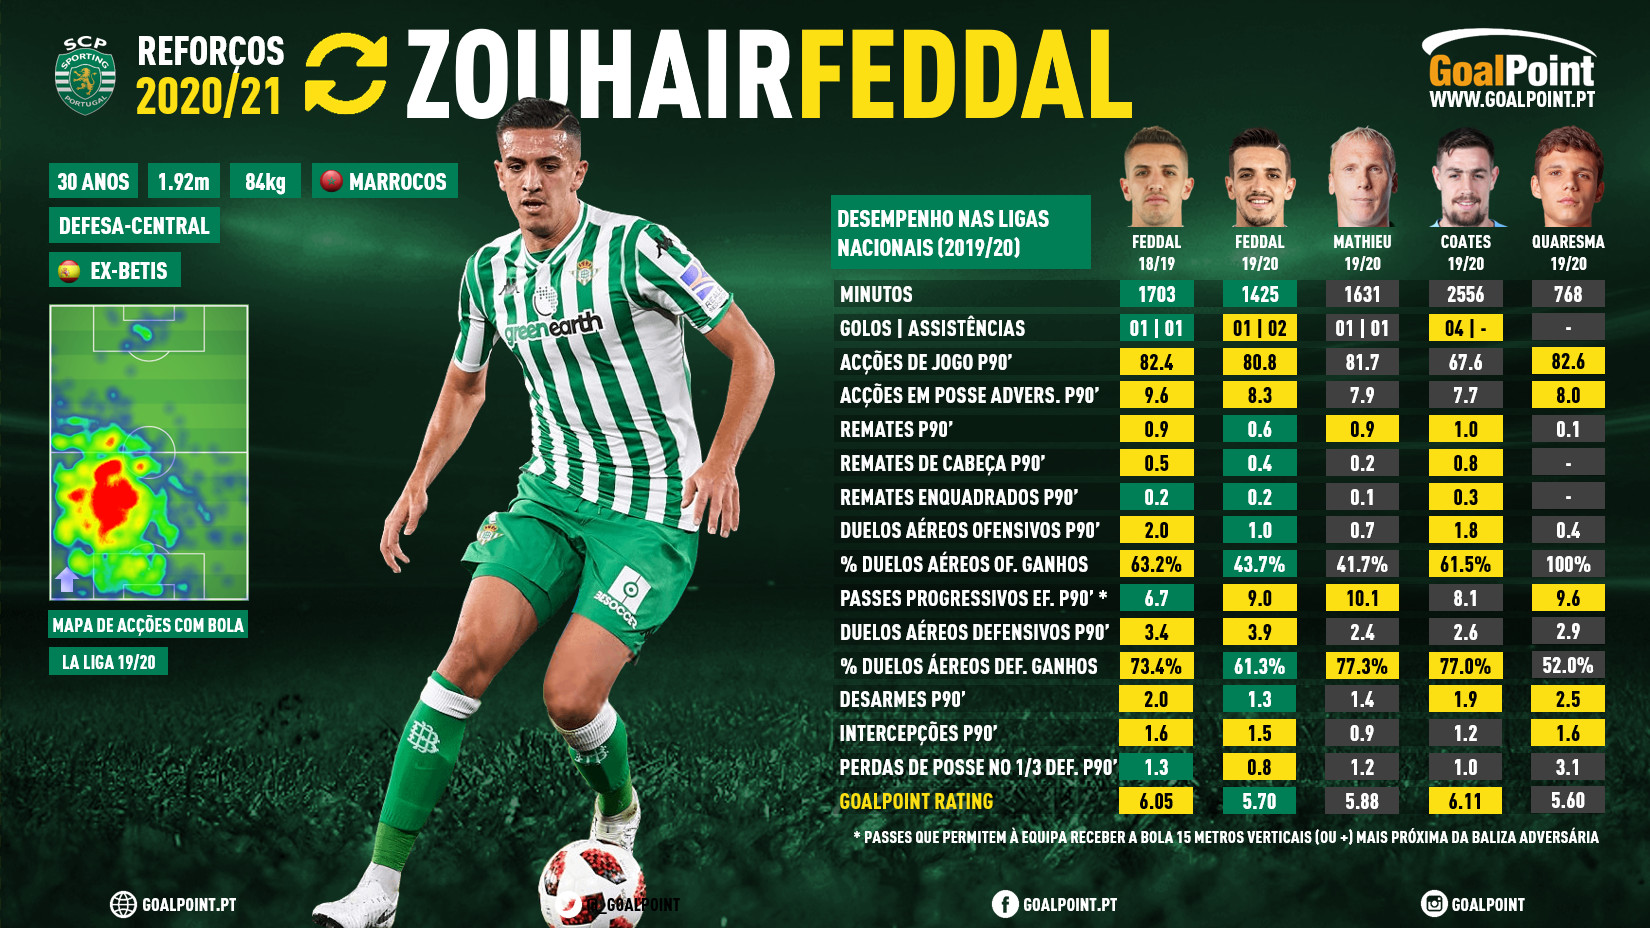 GoalPoint-Reforcos-202021-Sporting-Zouhair-Feddal-infog